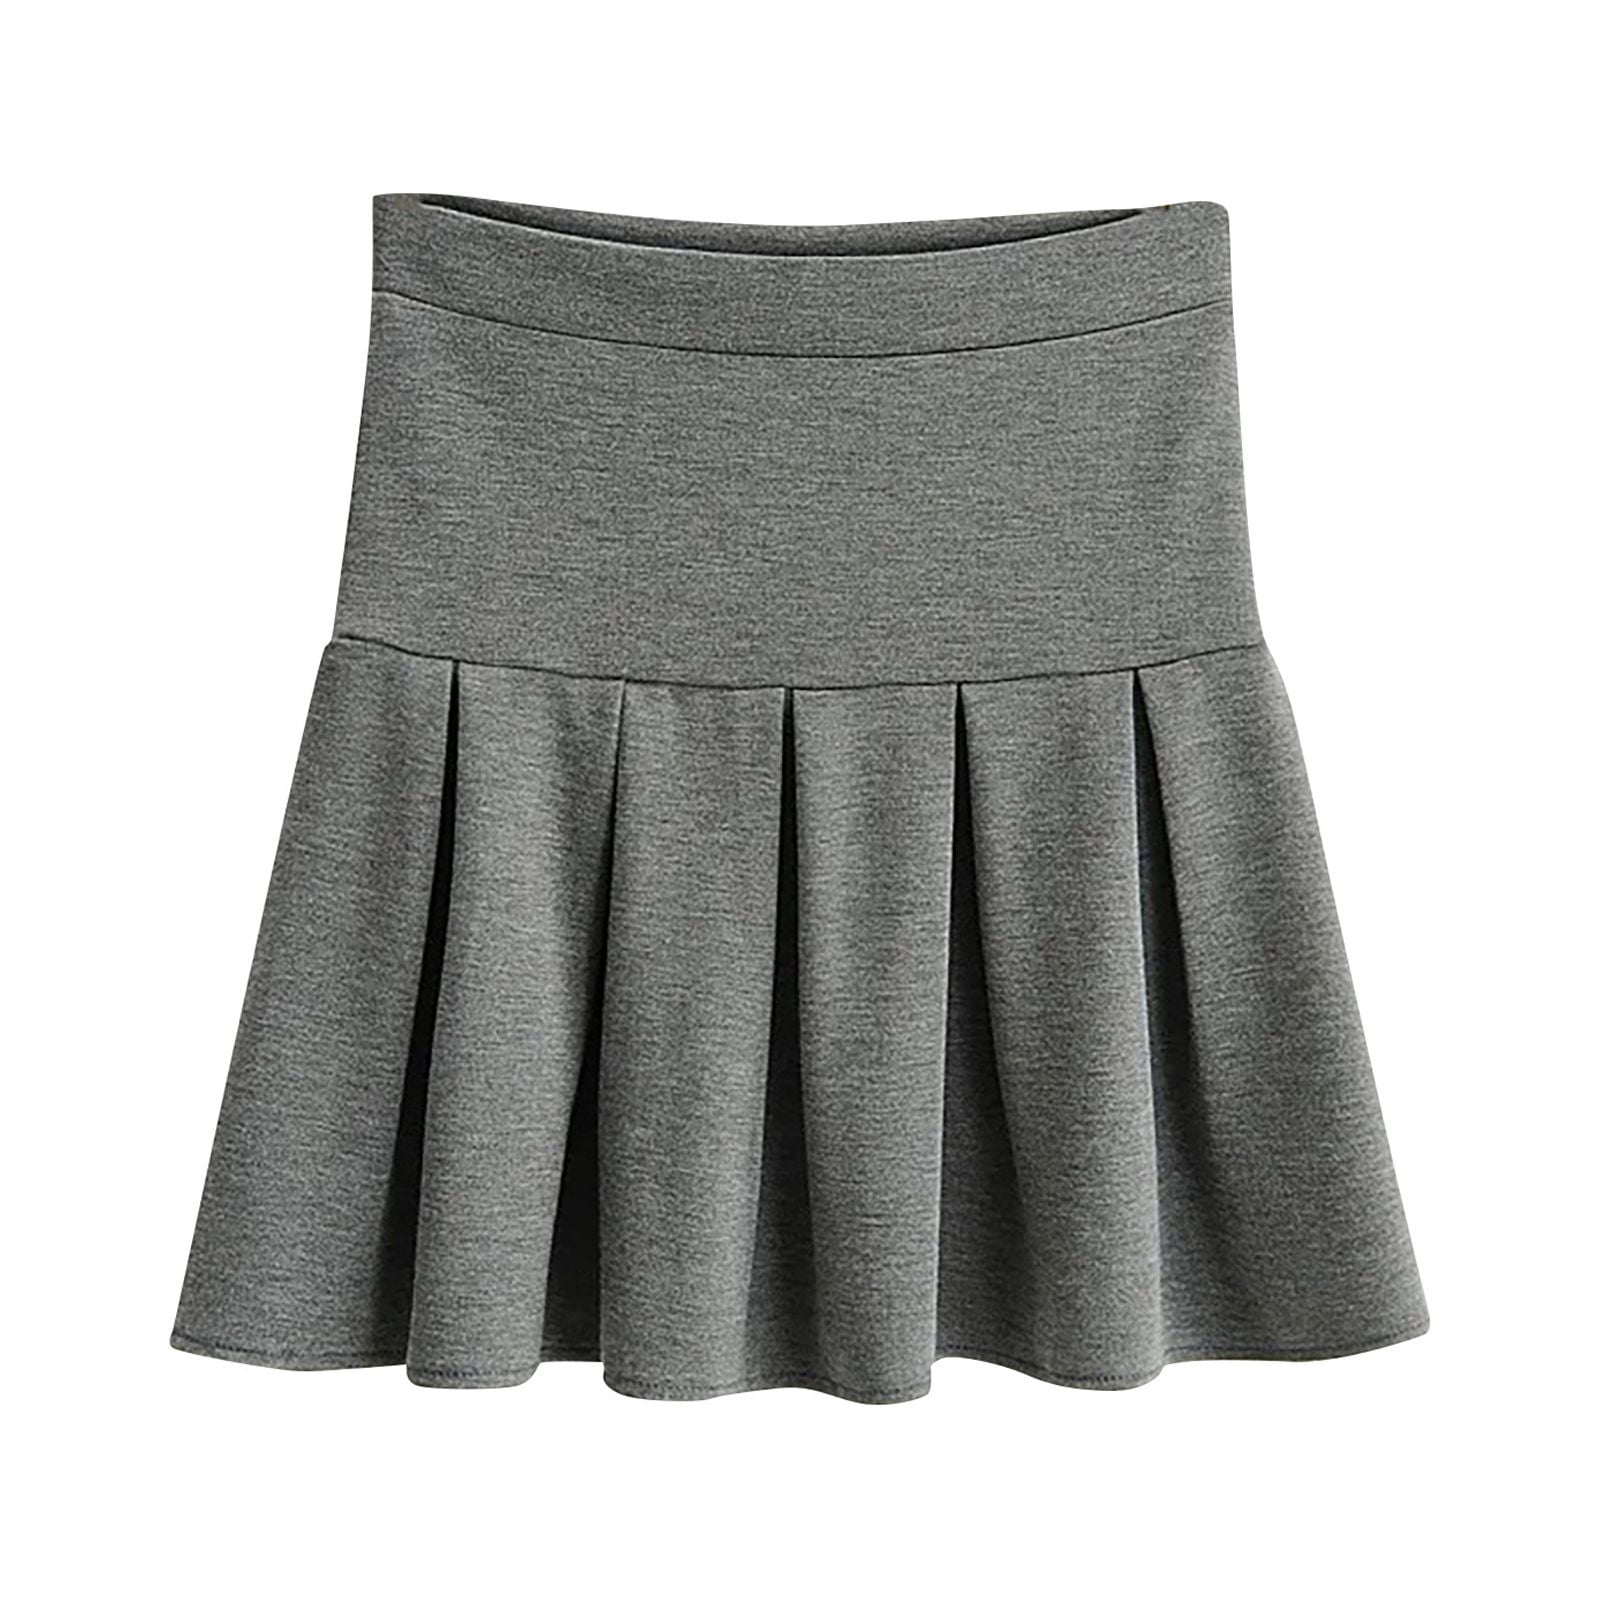 Charella Women's A-Line Skirt Solid Color High Waist Skirt Pleated ...